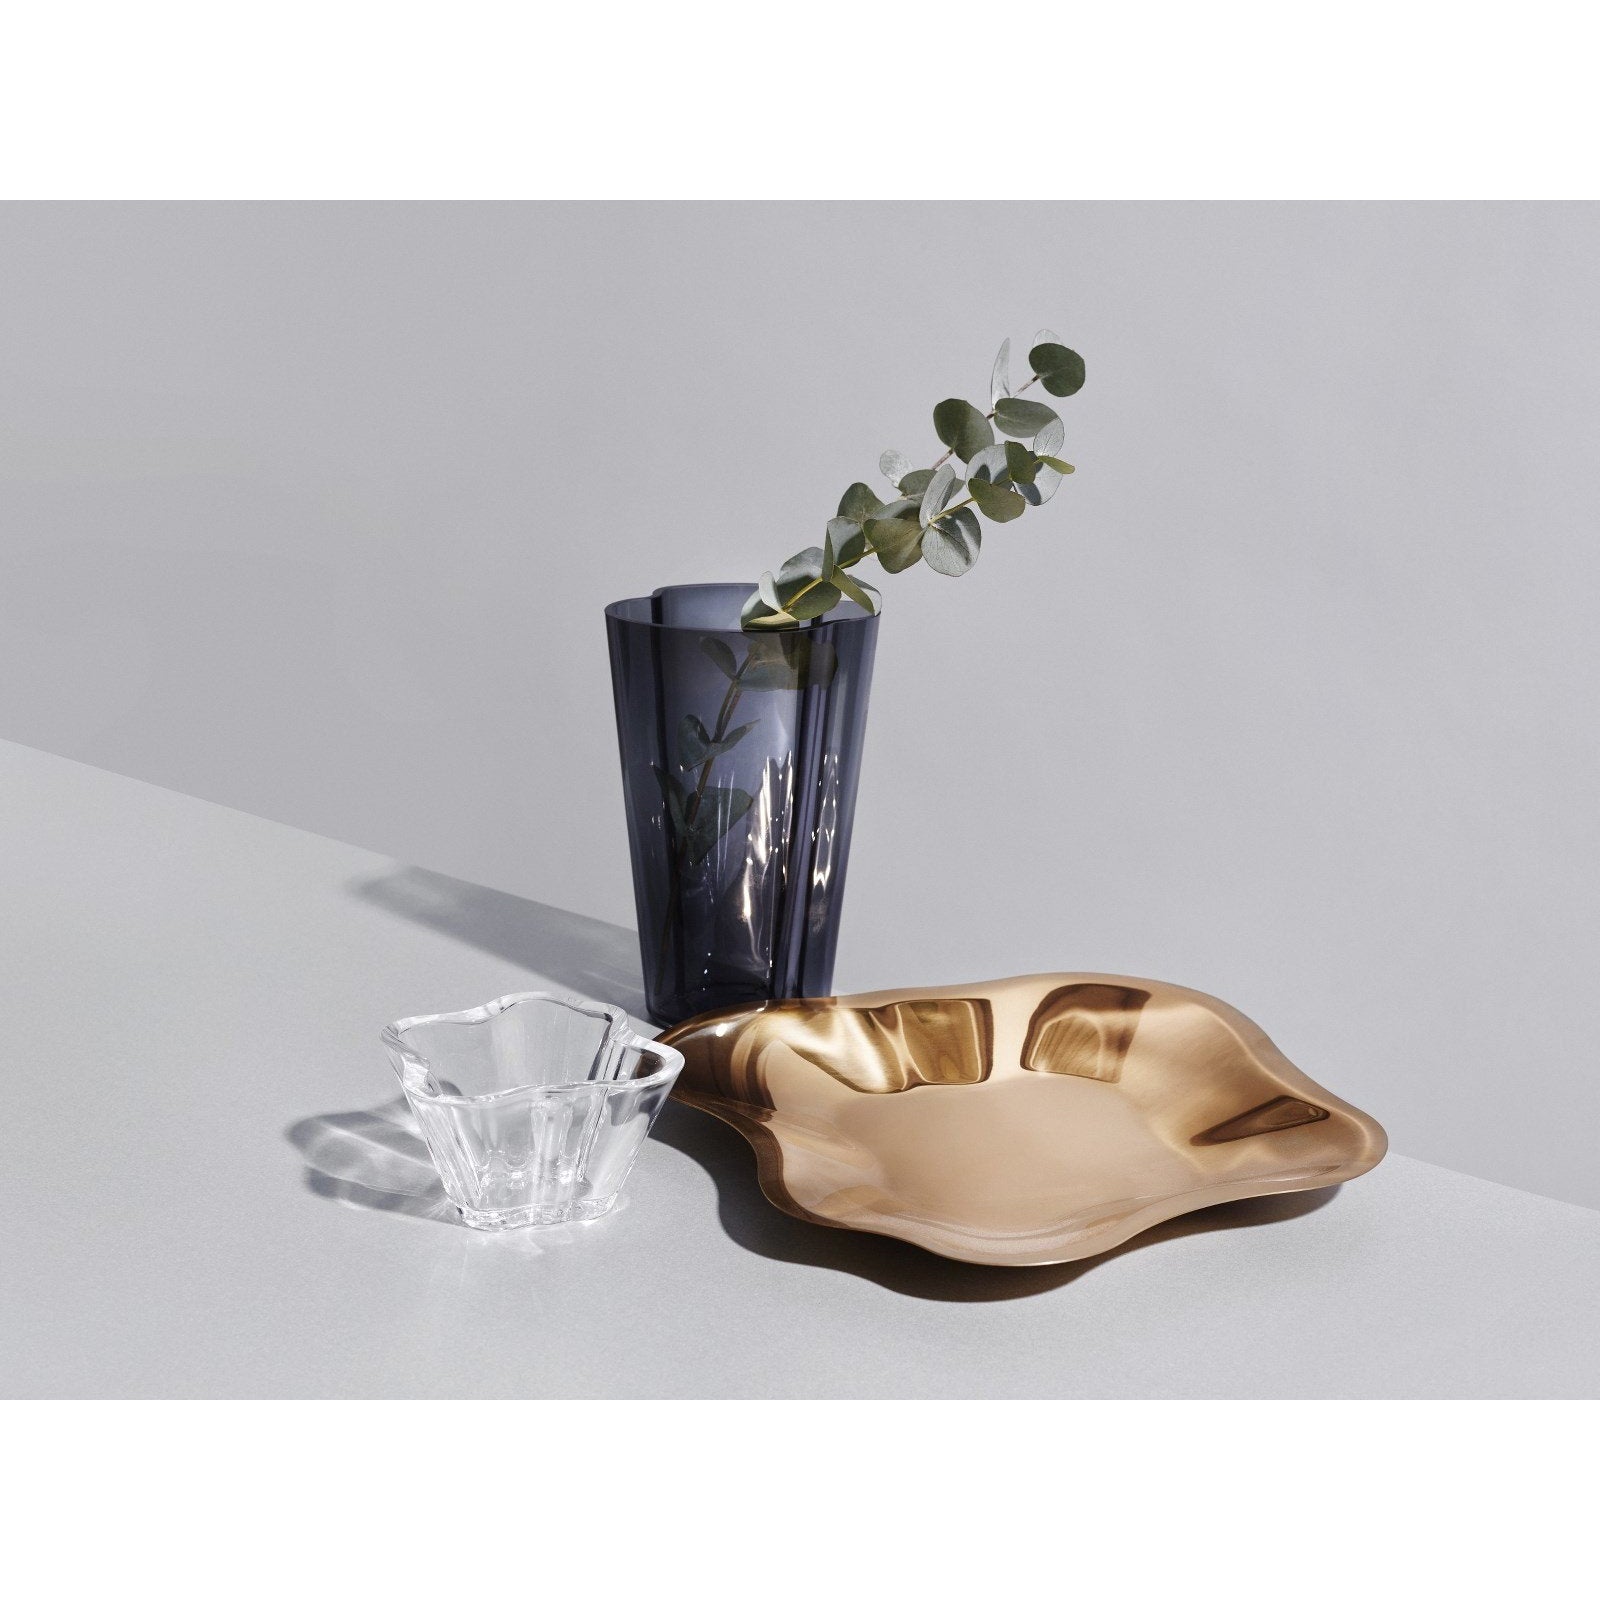 Iittala Alvar Aalto Vase Dark Grey, 22cm